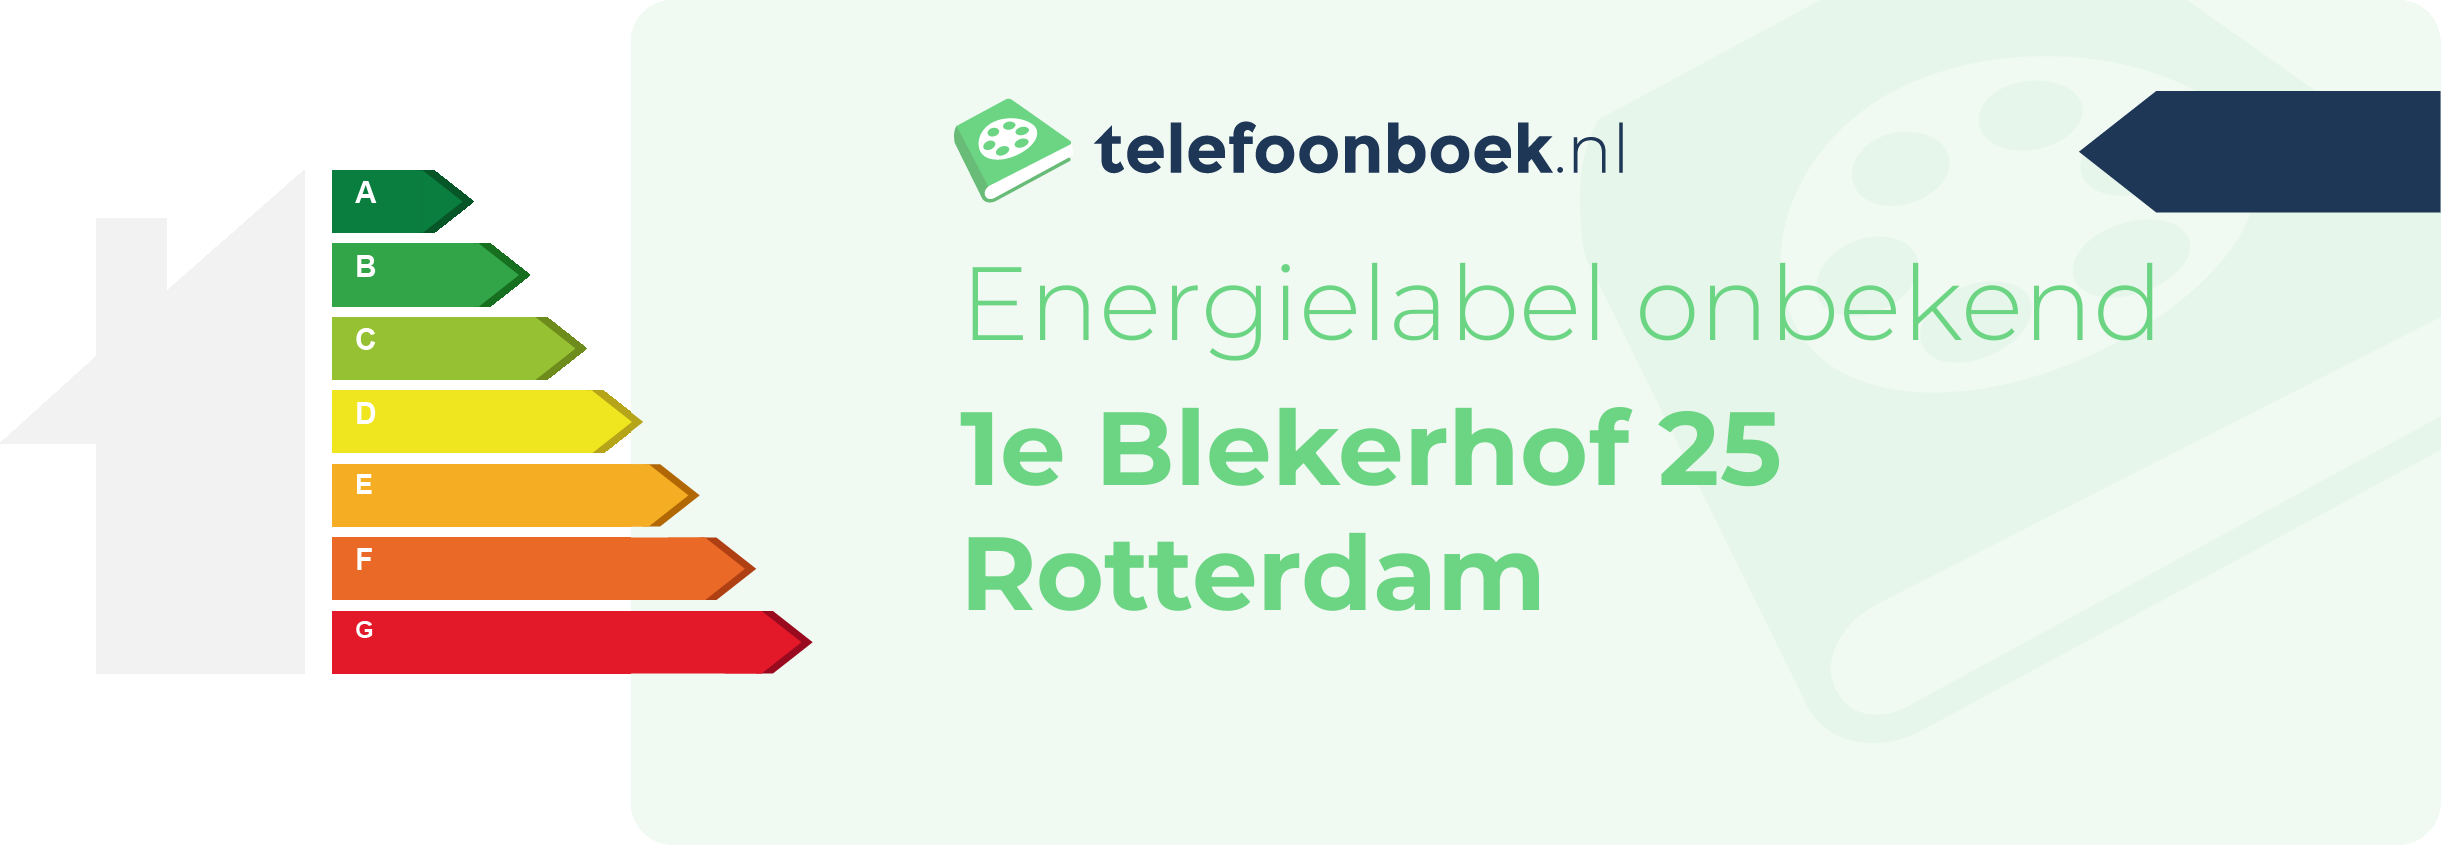 Energielabel 1e Blekerhof 25 Rotterdam